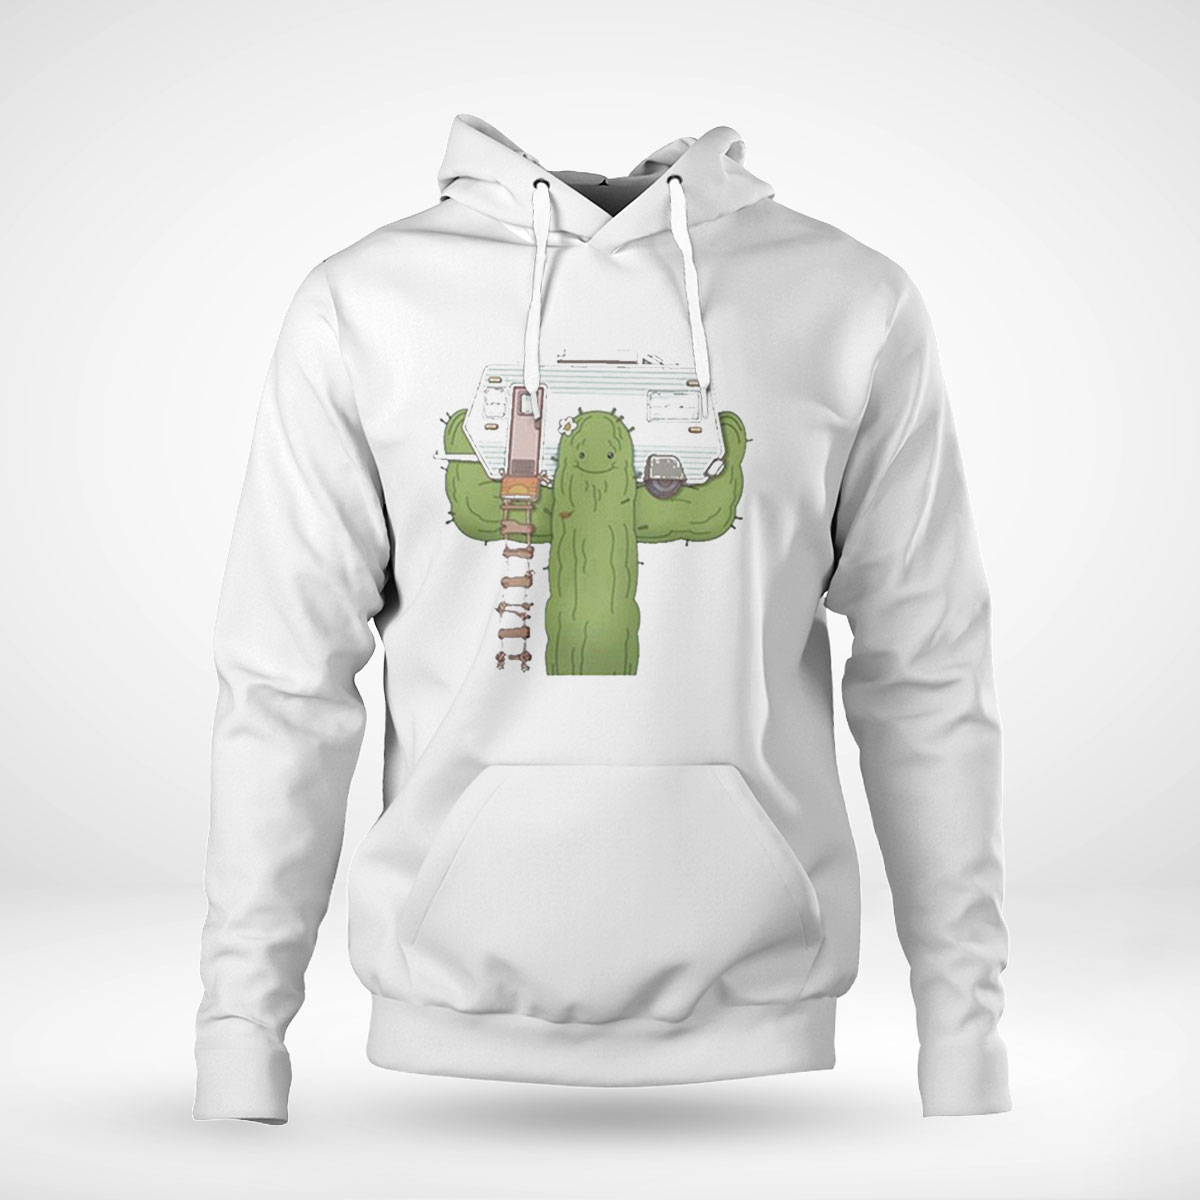 https://newagetee.com/wp-content/uploads/2023/02/pullover-hoodie-cactus-house-theodd1sout-oddballs-shirt-ladies-t-shirt.jpeg